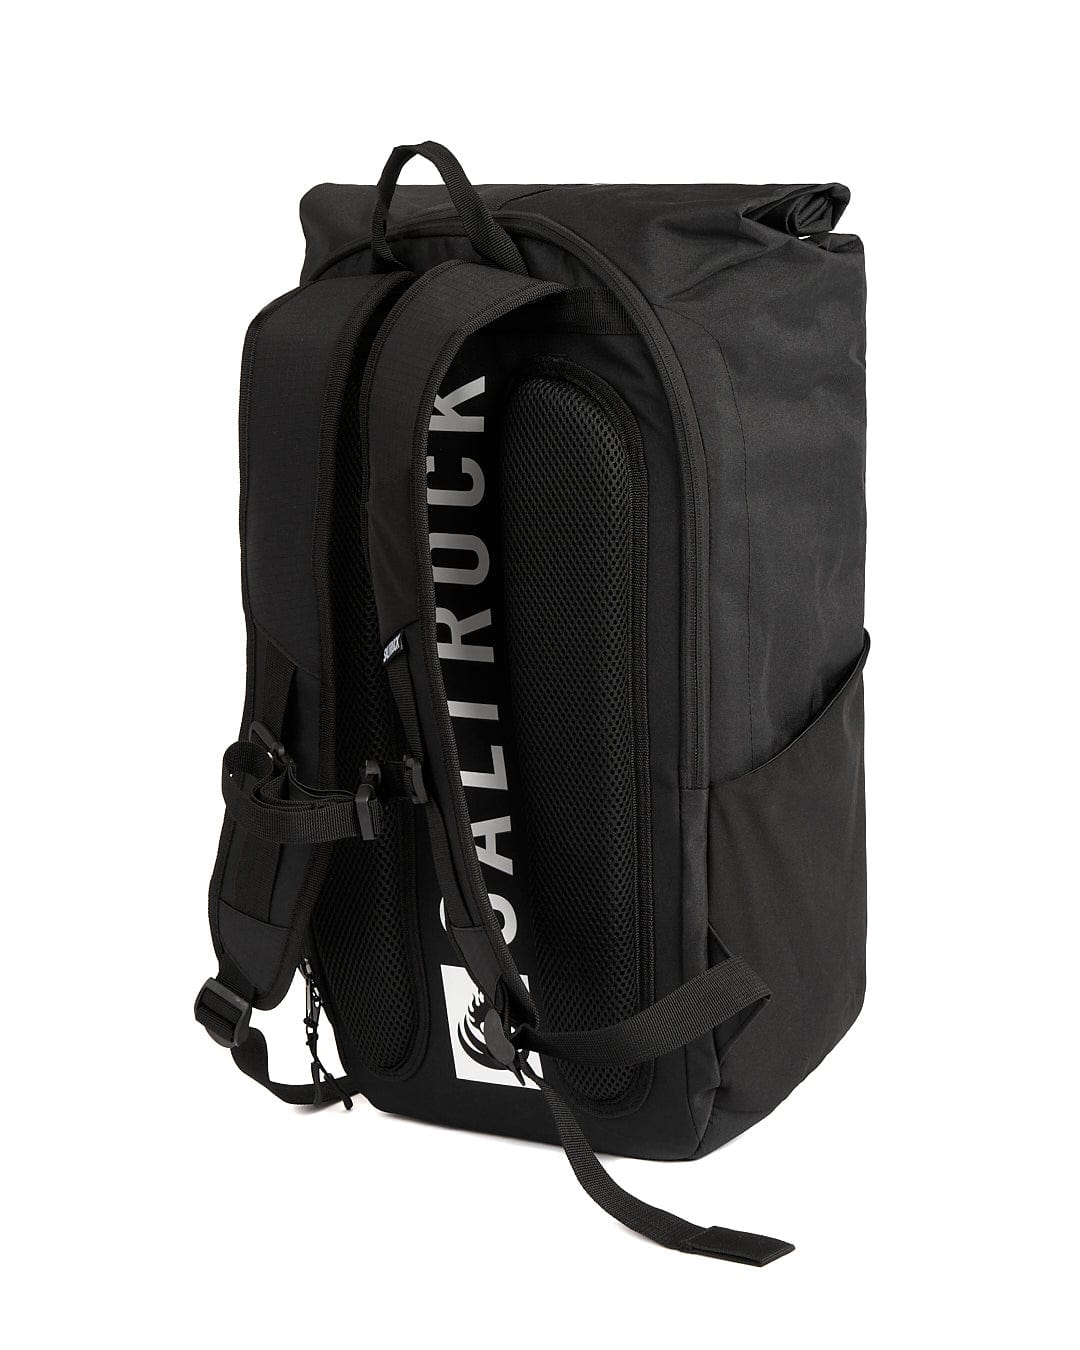 A Saltrock Streamline - Backpack - Black with a logo on it.